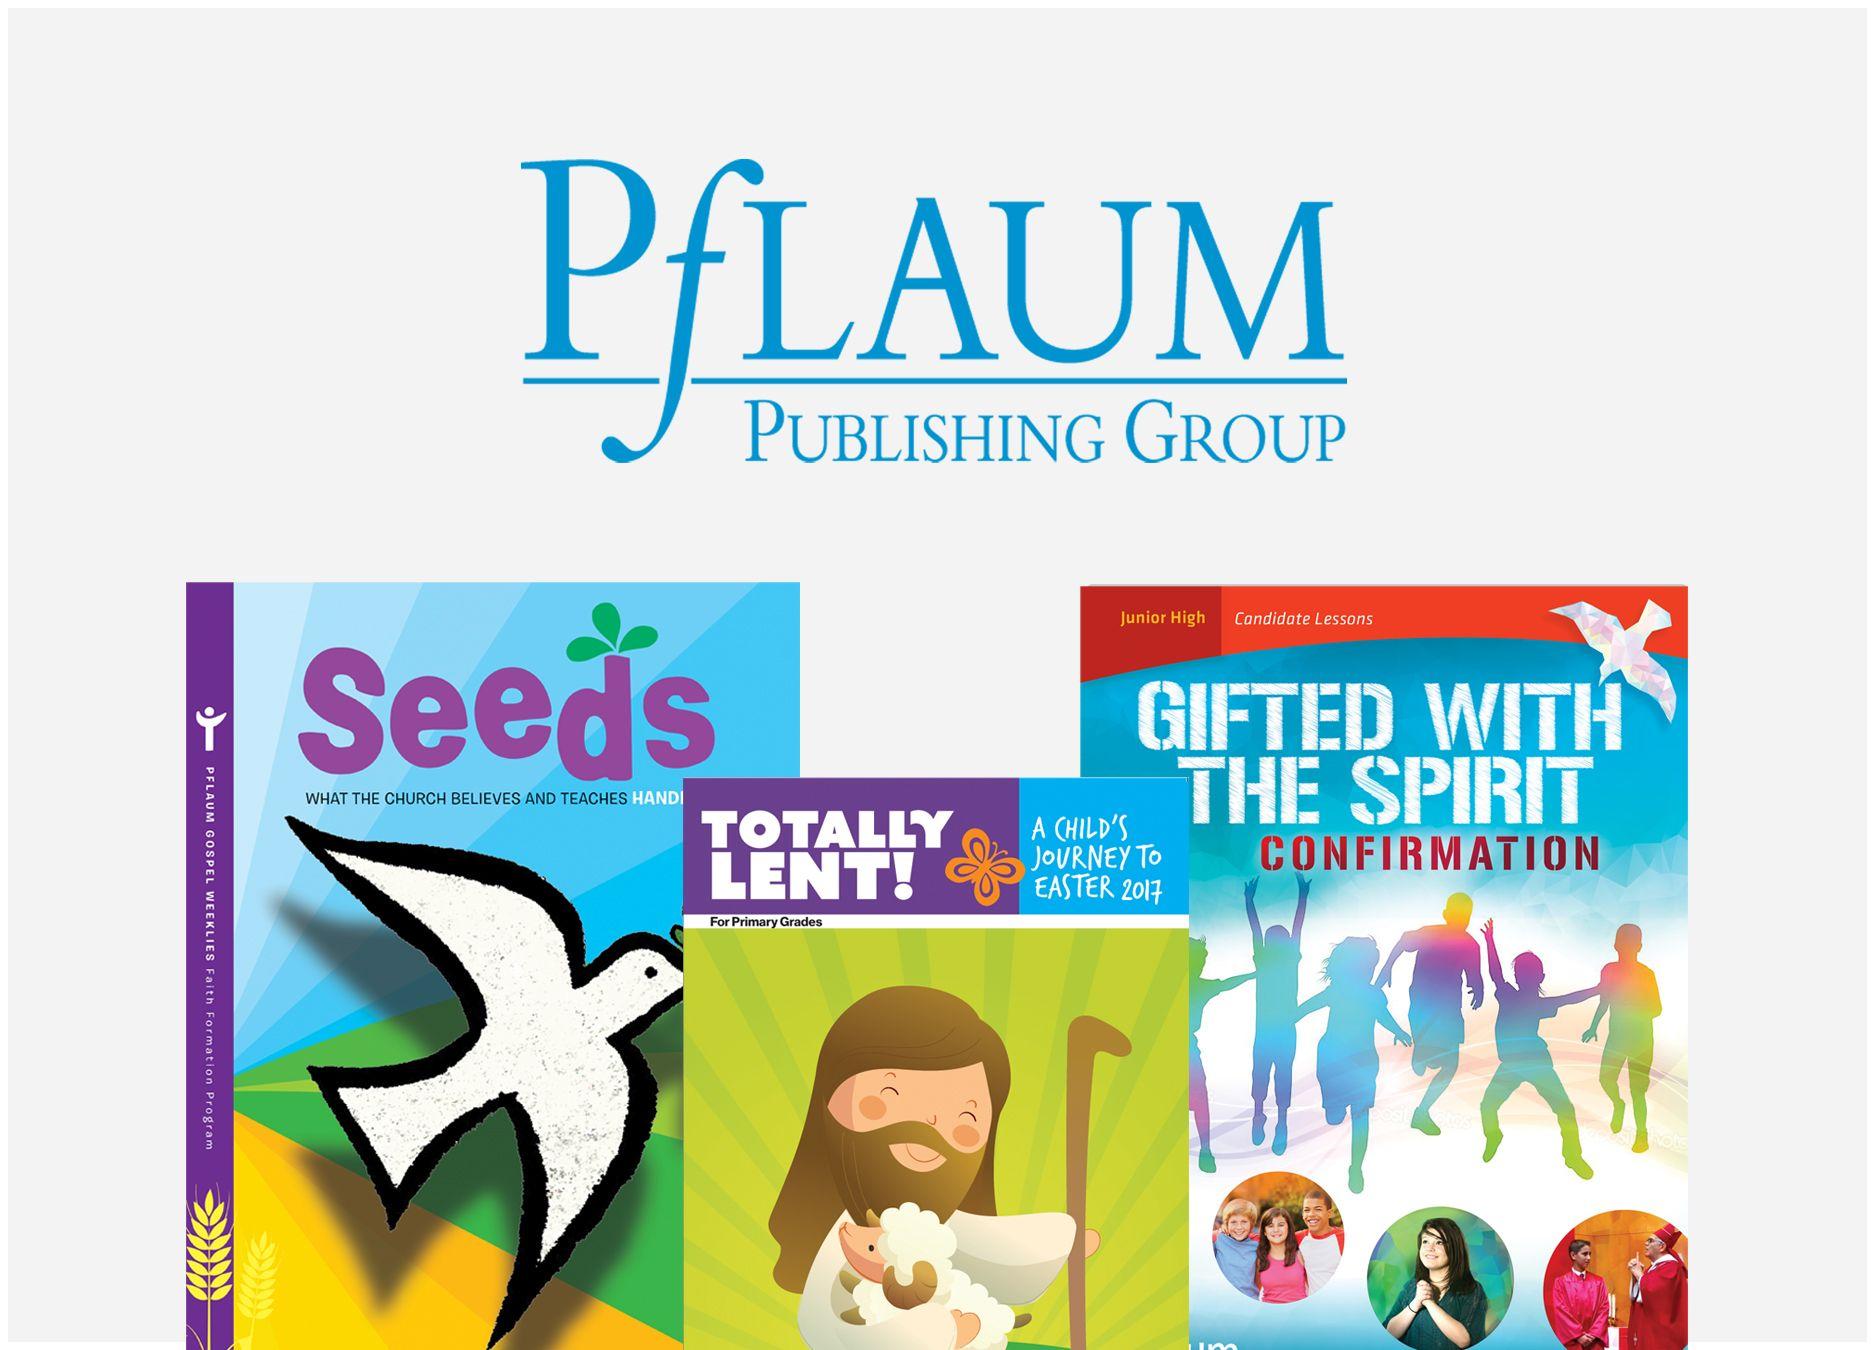 Pflaum Logo - Pflaum Publishing - Bayard, Inc.